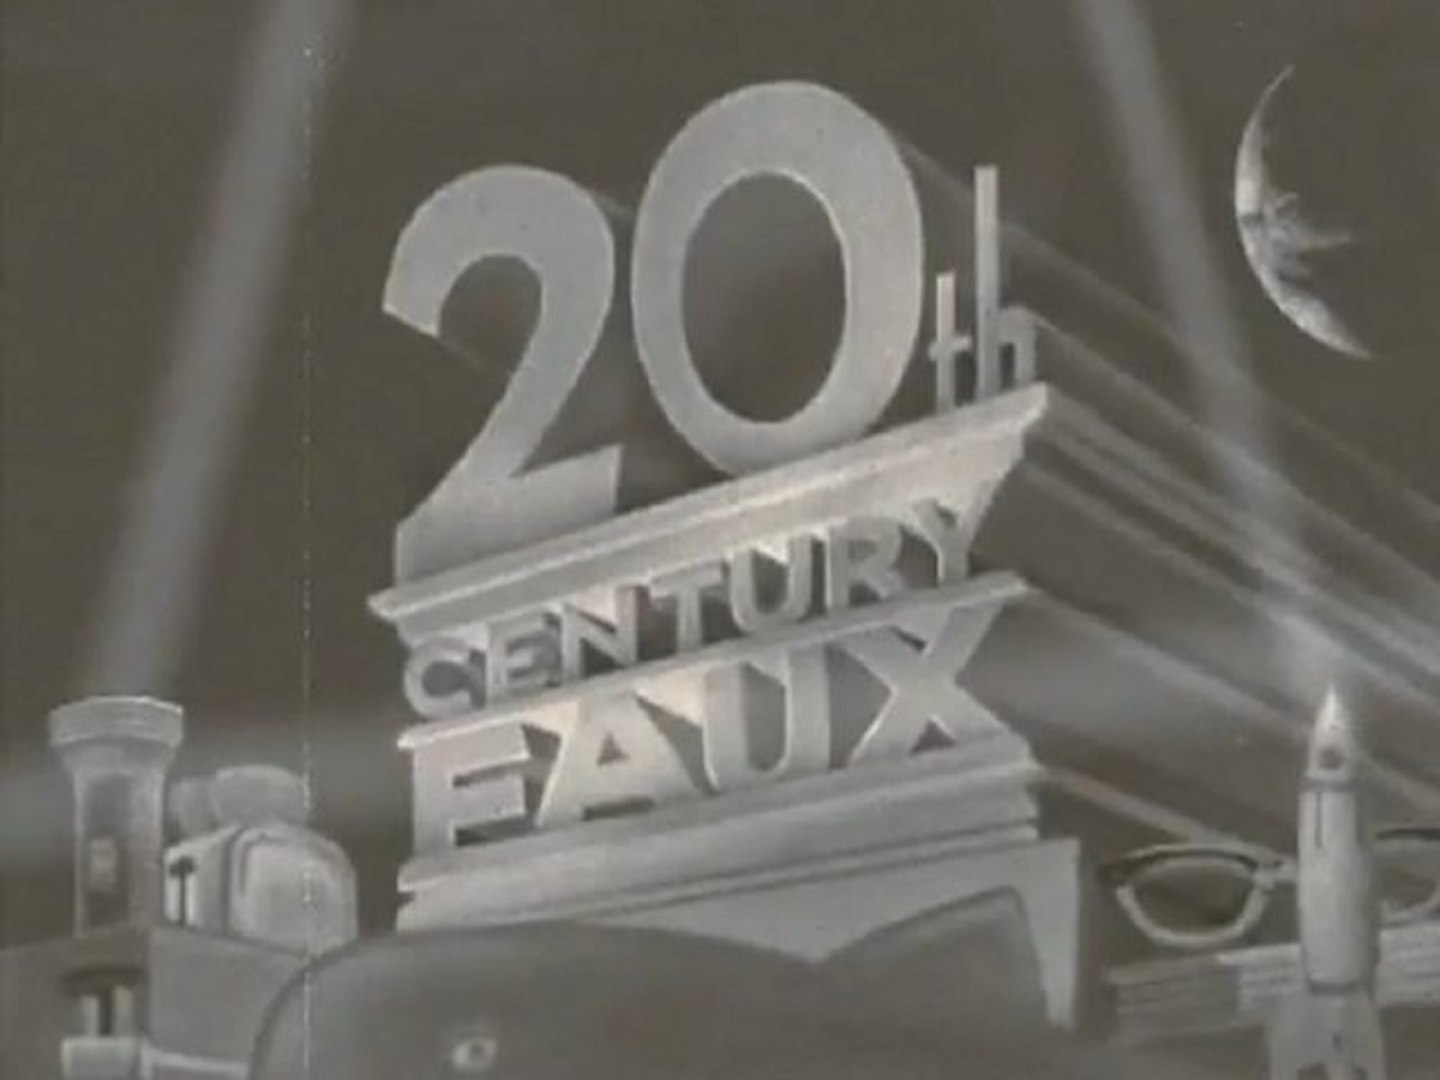 20th Century Fox Logo Spoof - Paint Shop - video Dailymotion